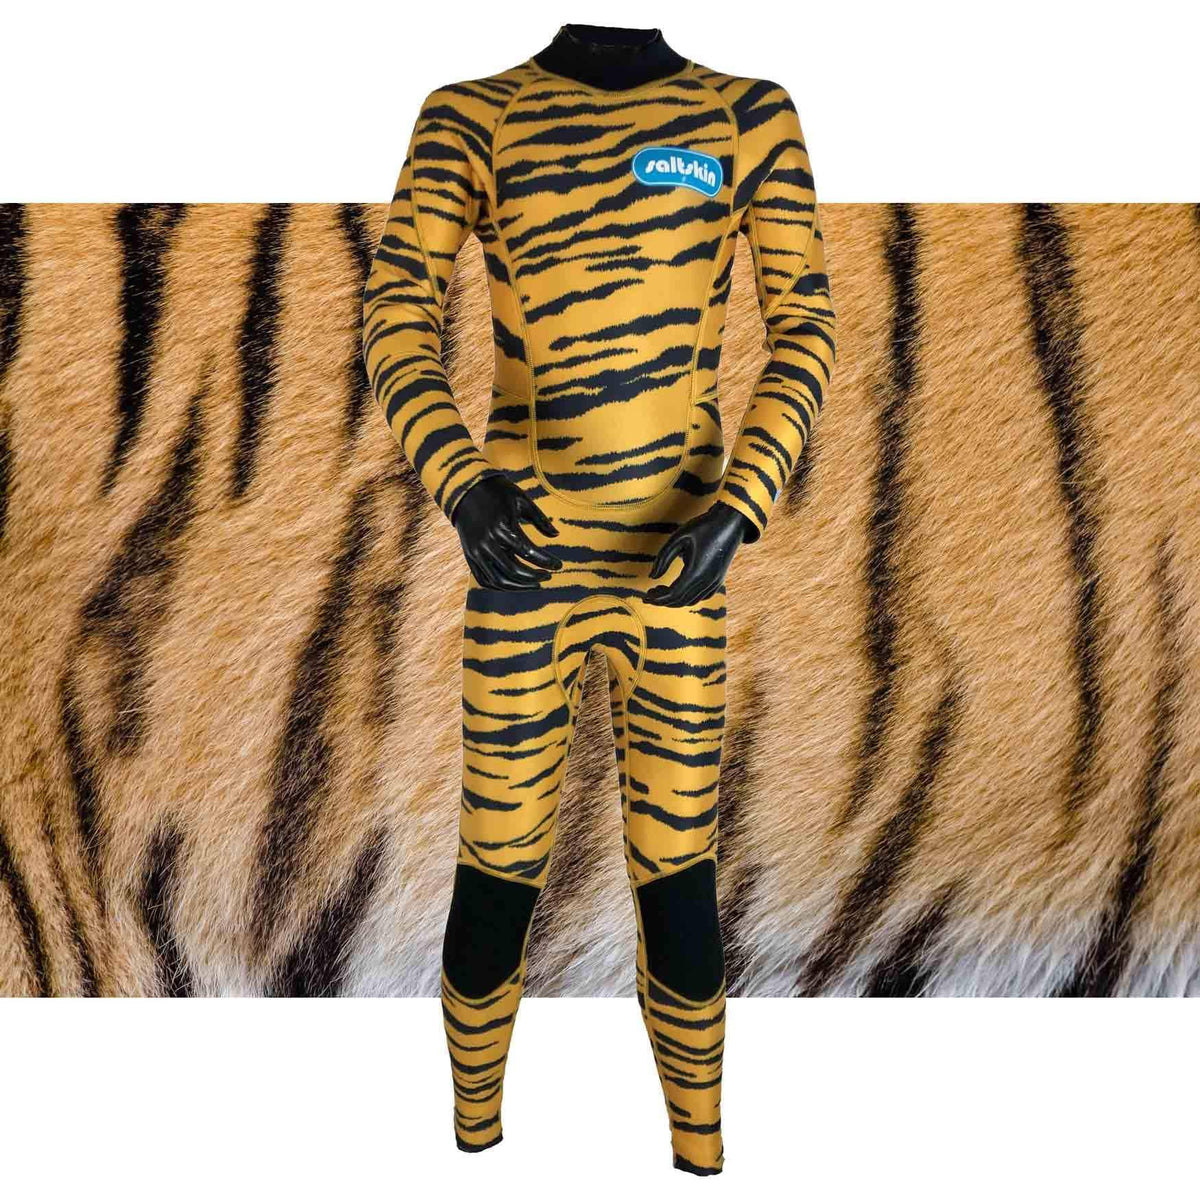 Saltskin Kids Tiger 3mm Full Wetsuit - Tiger Kids Full Length Wetsuit by Saltskin